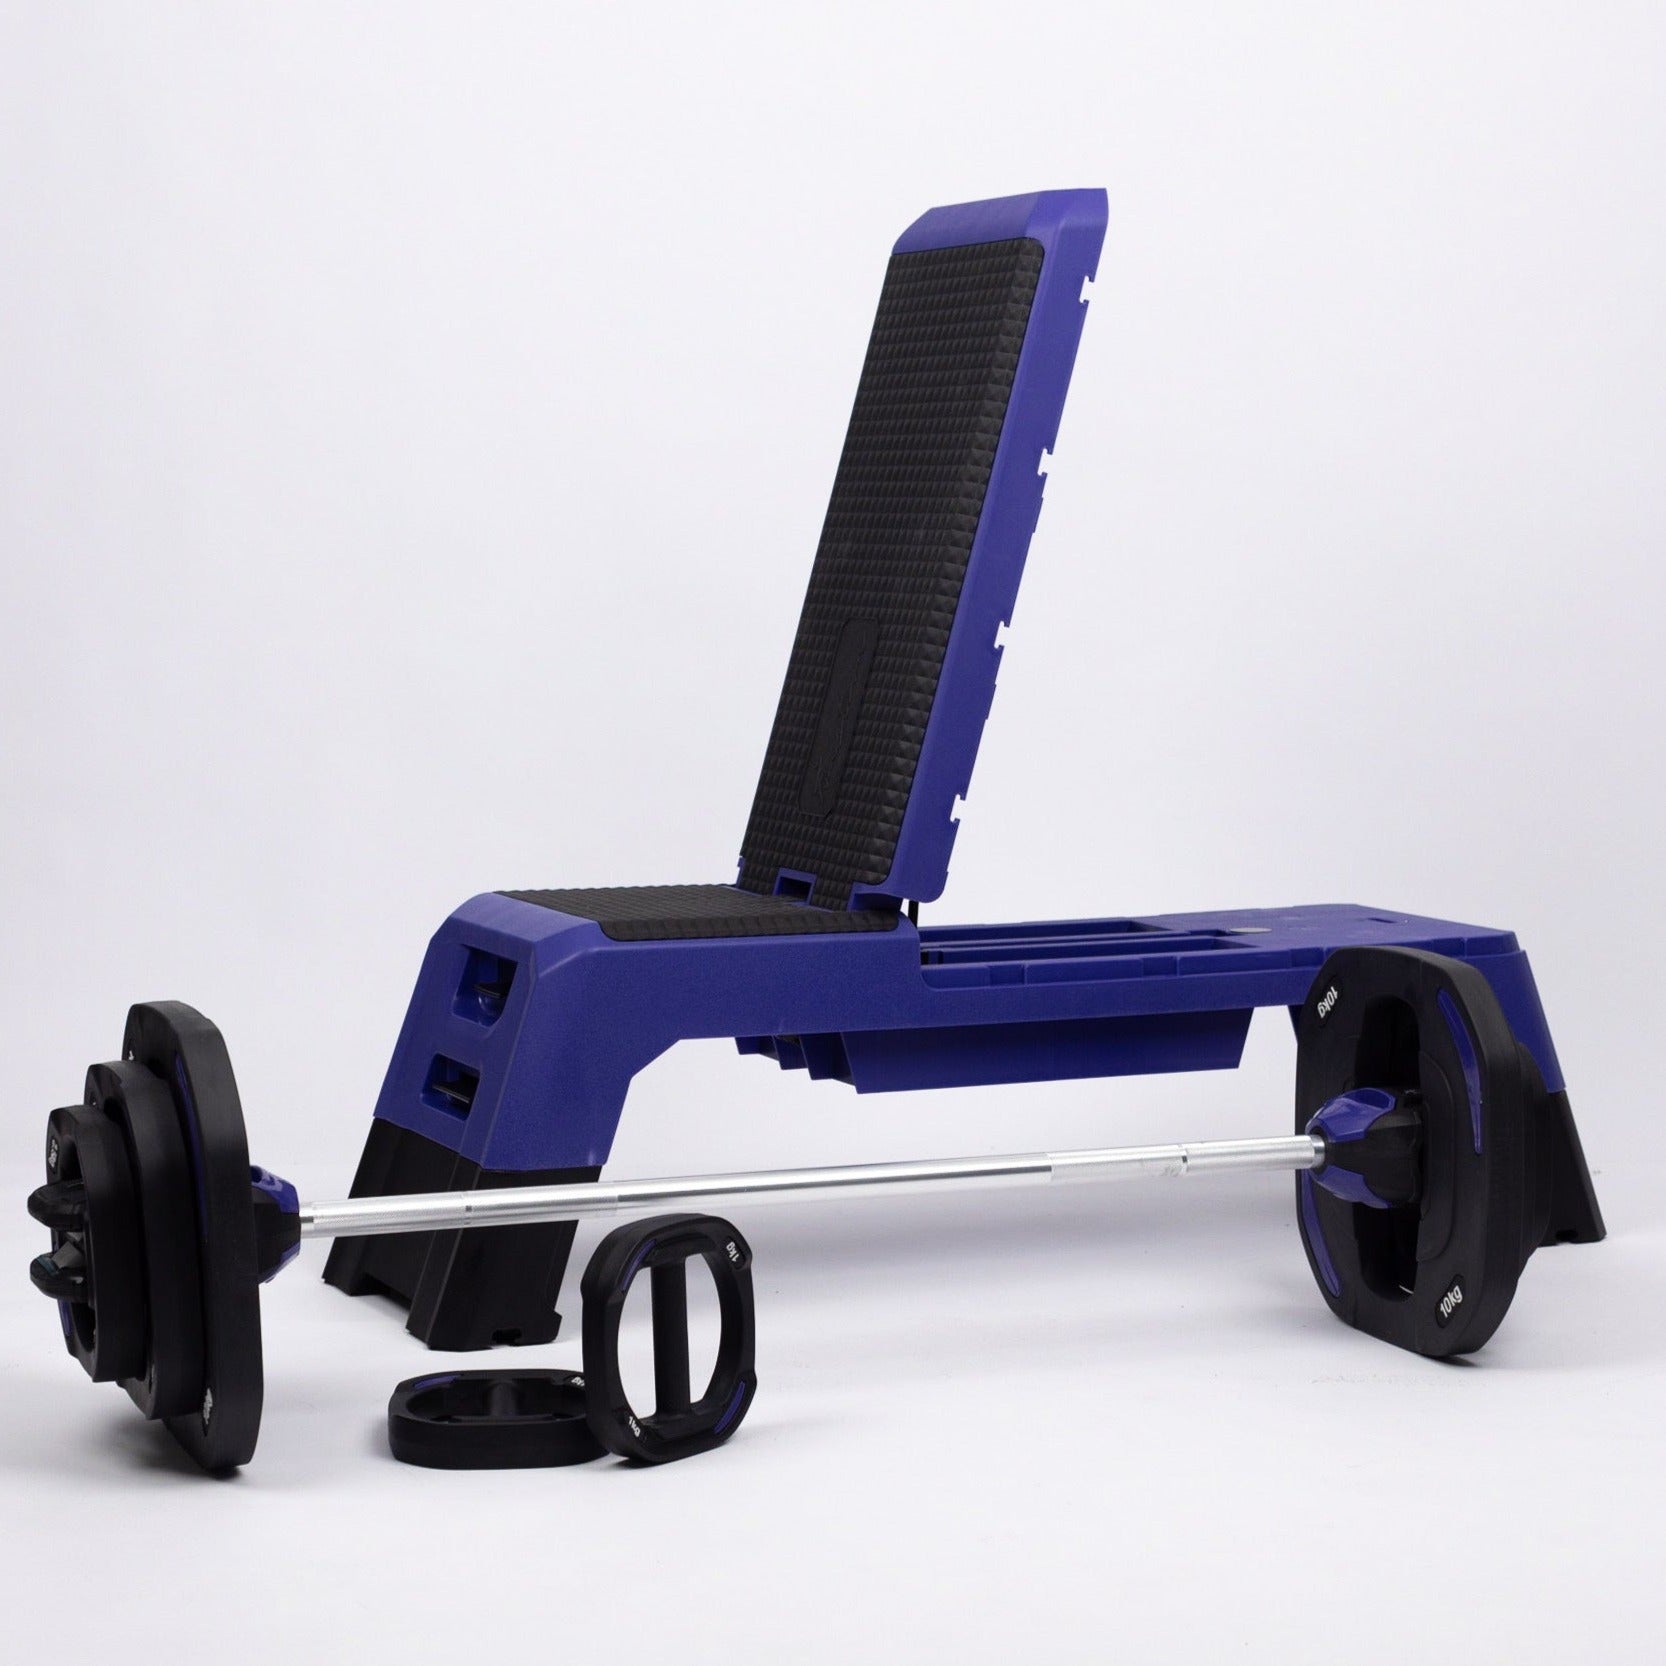 Adjustable Stepper and Pump Set combo - The Pilates Shop